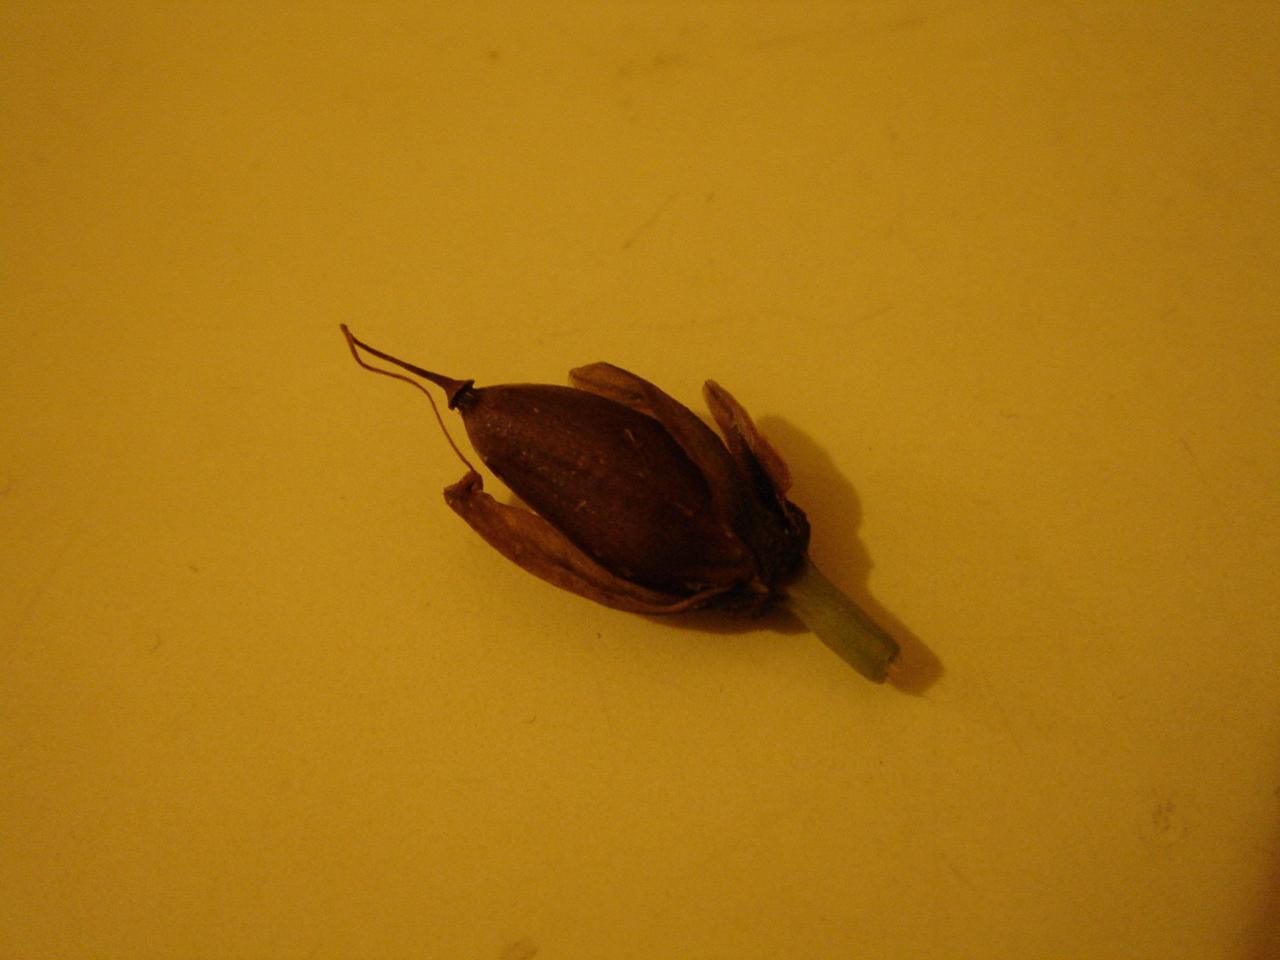 Ololiuhqui seed